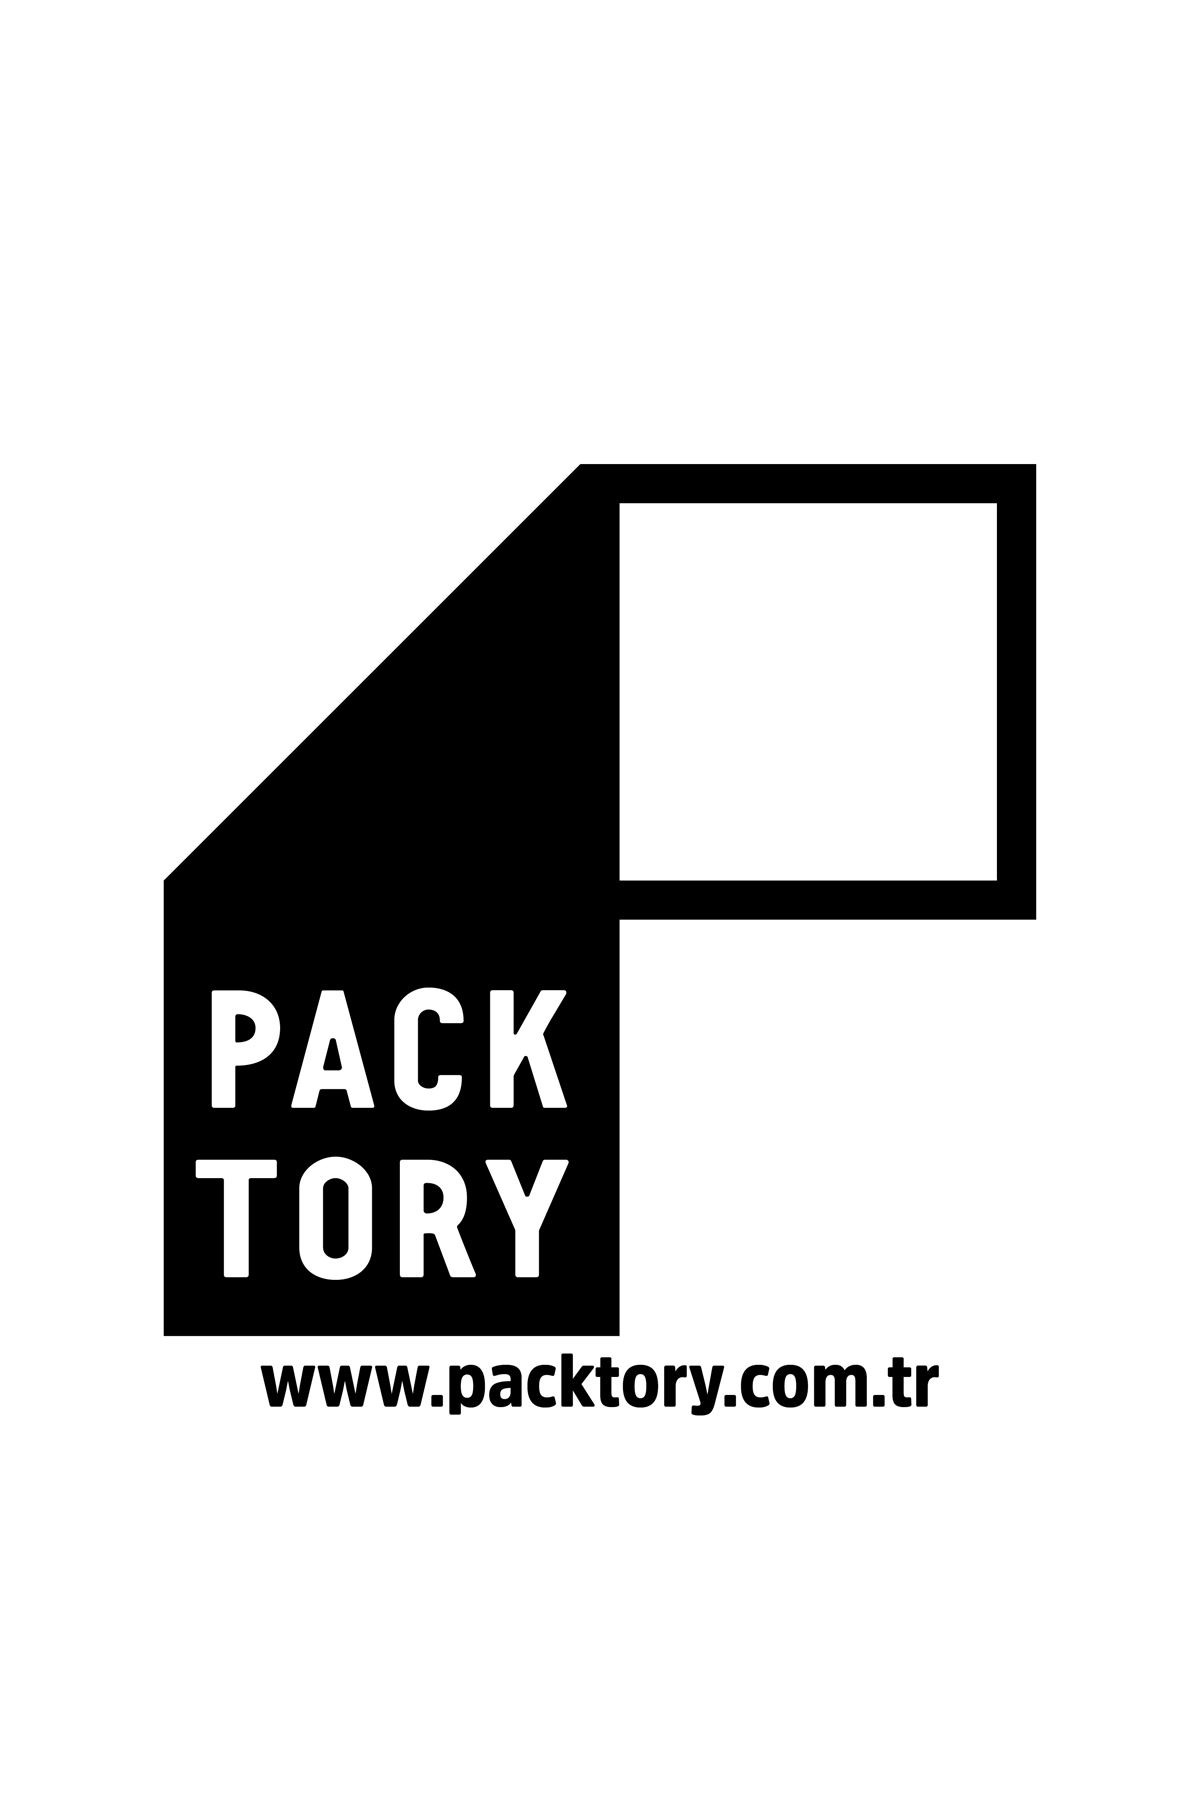 Packtory 10 x 25 + 3 Cm  Aluminyum Yan Körüklü Quadro Ambalaj 250 Gr. 250 Adet